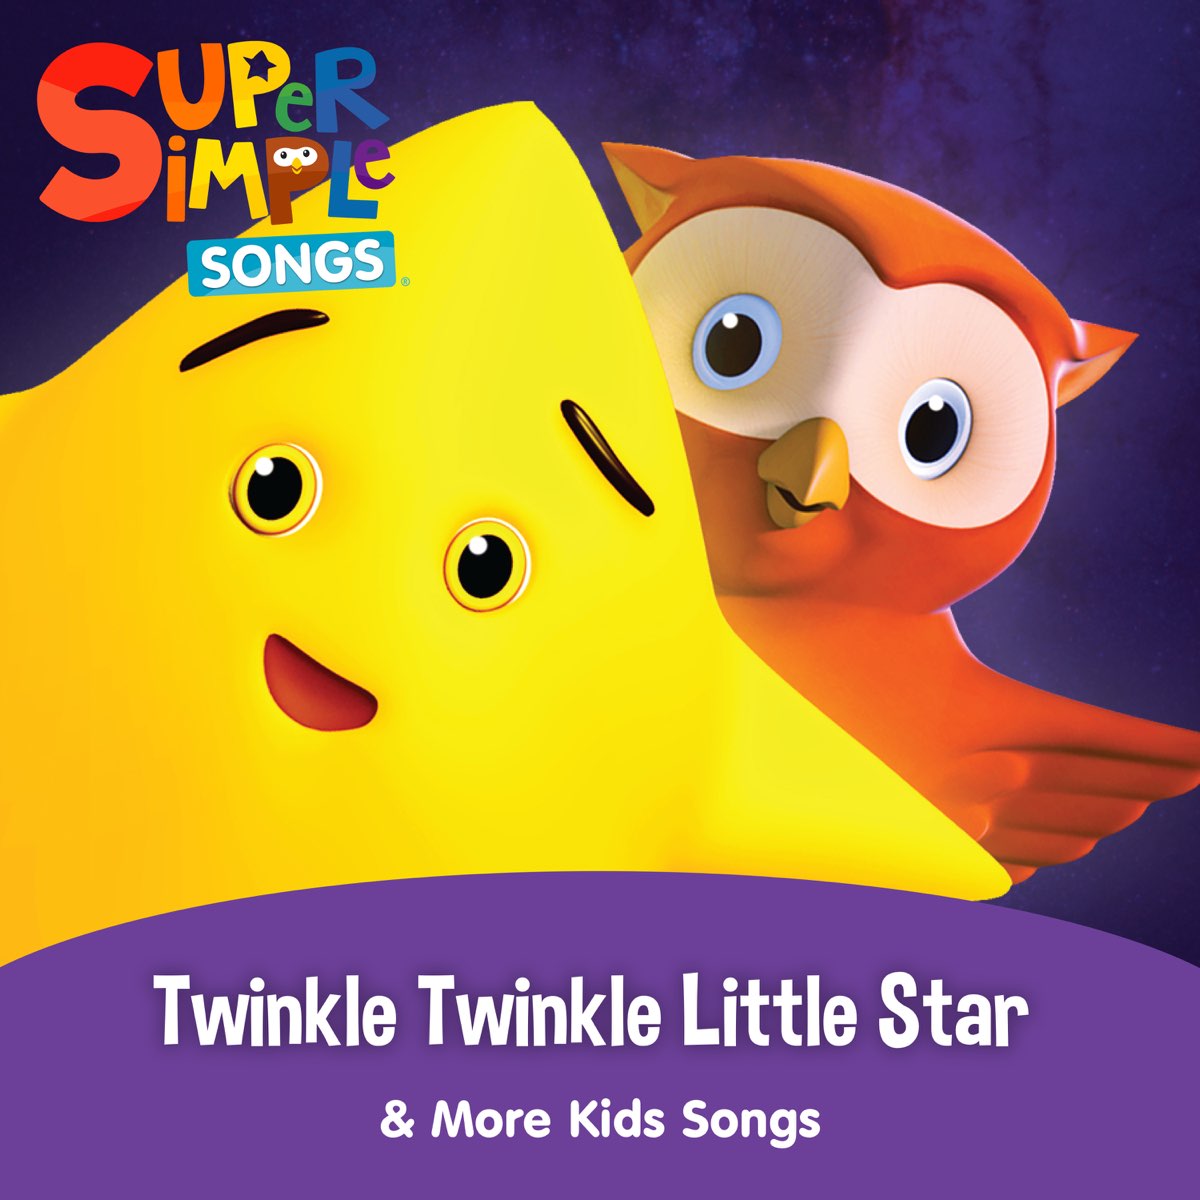 twinkle-twinkle-little-star-more-kids-songs-album-by-super-simple